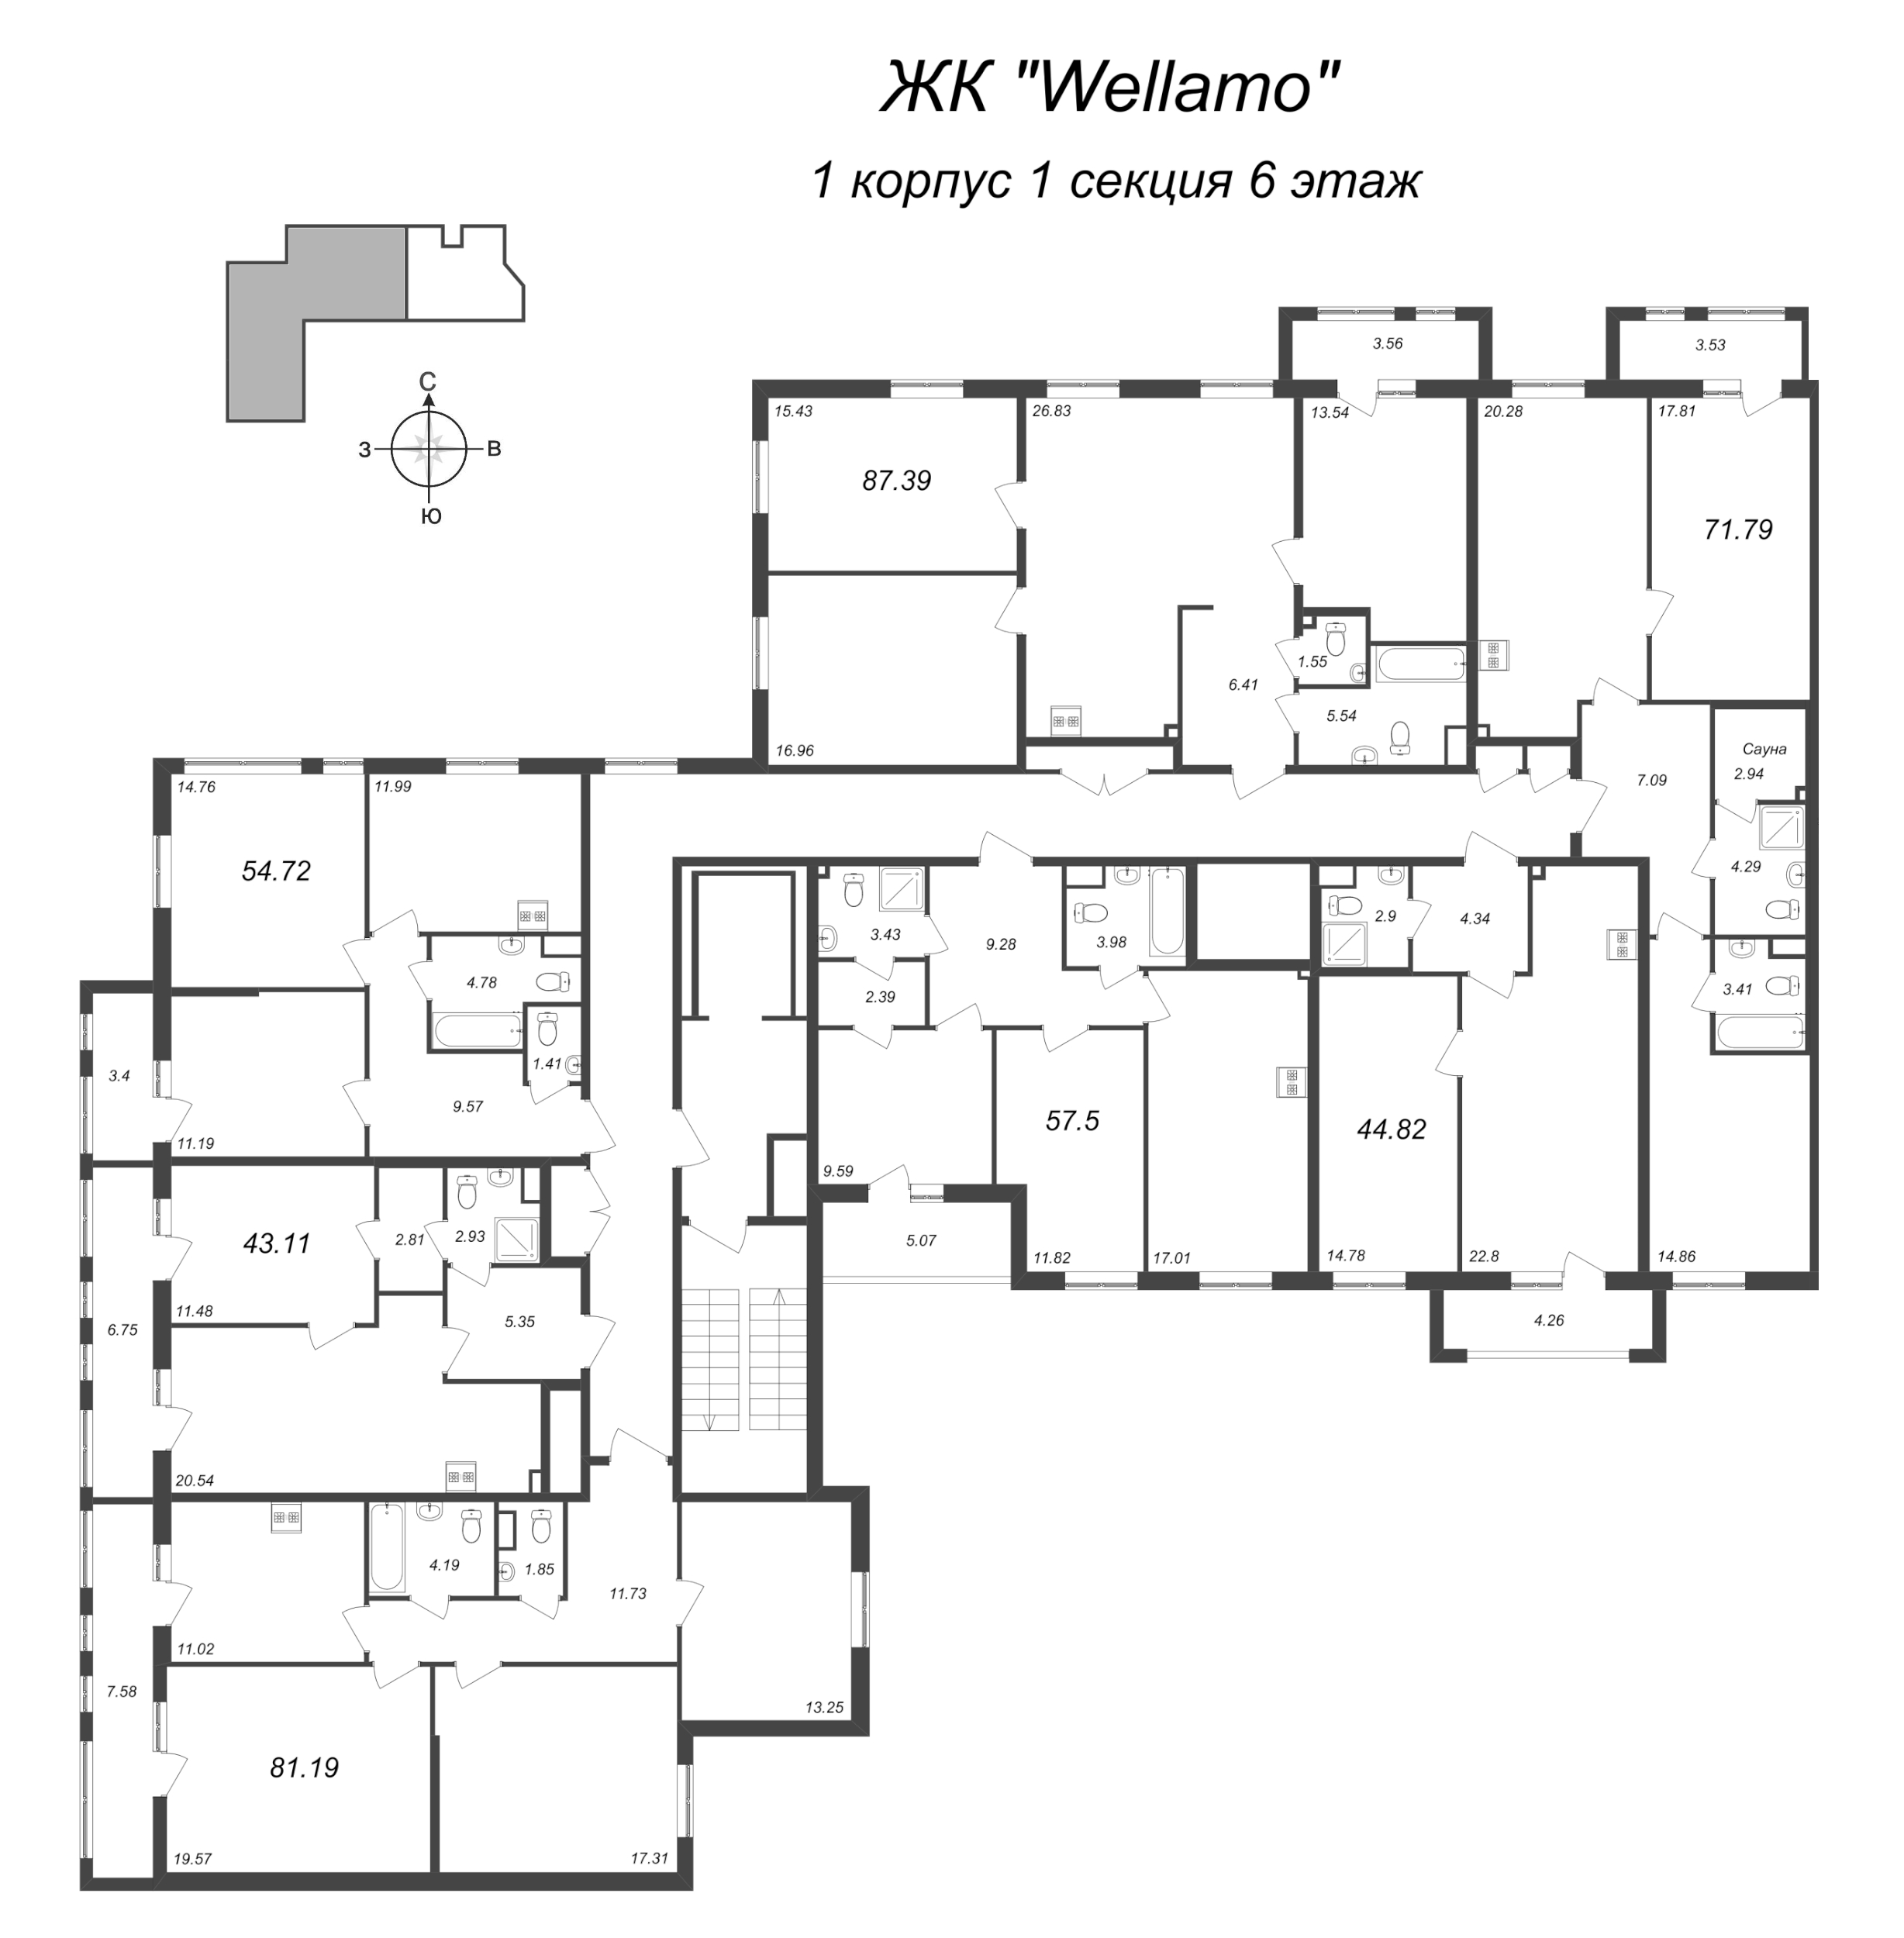 3-комнатная (Евро) квартира, 76.7 м² в ЖК "Wellamo" - планировка этажа